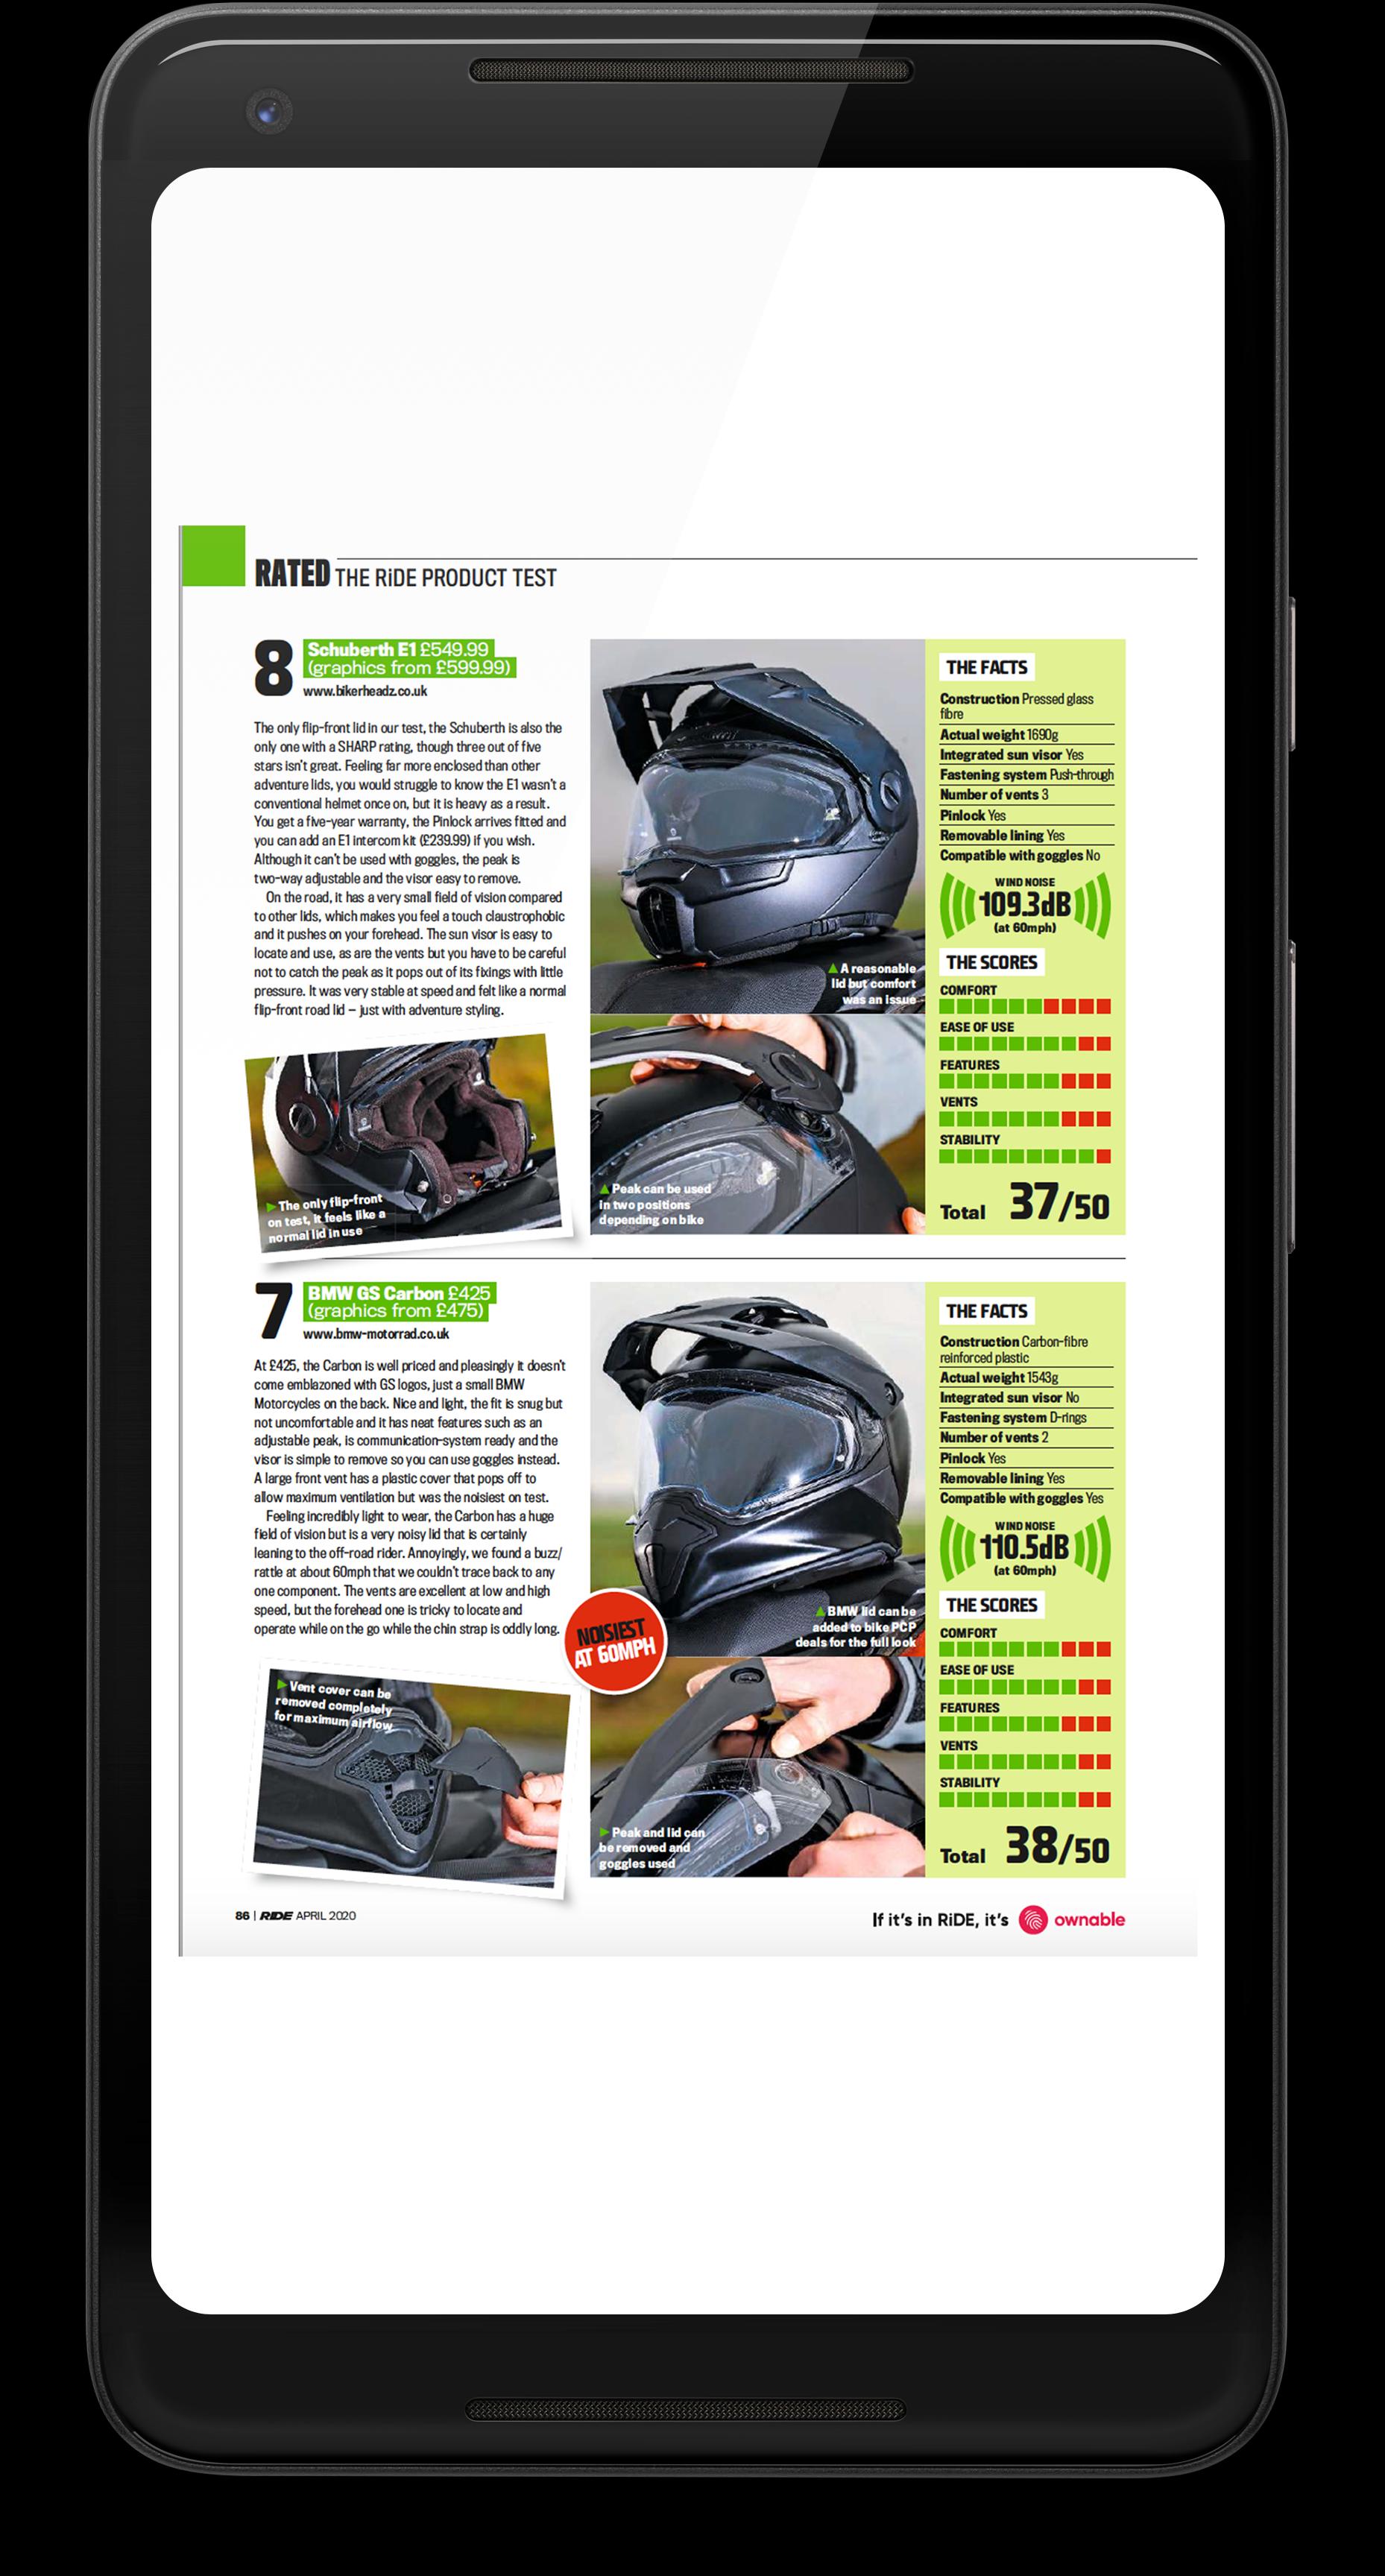 RiDE The Motorcycle Magazine 3.27 Screenshot 5